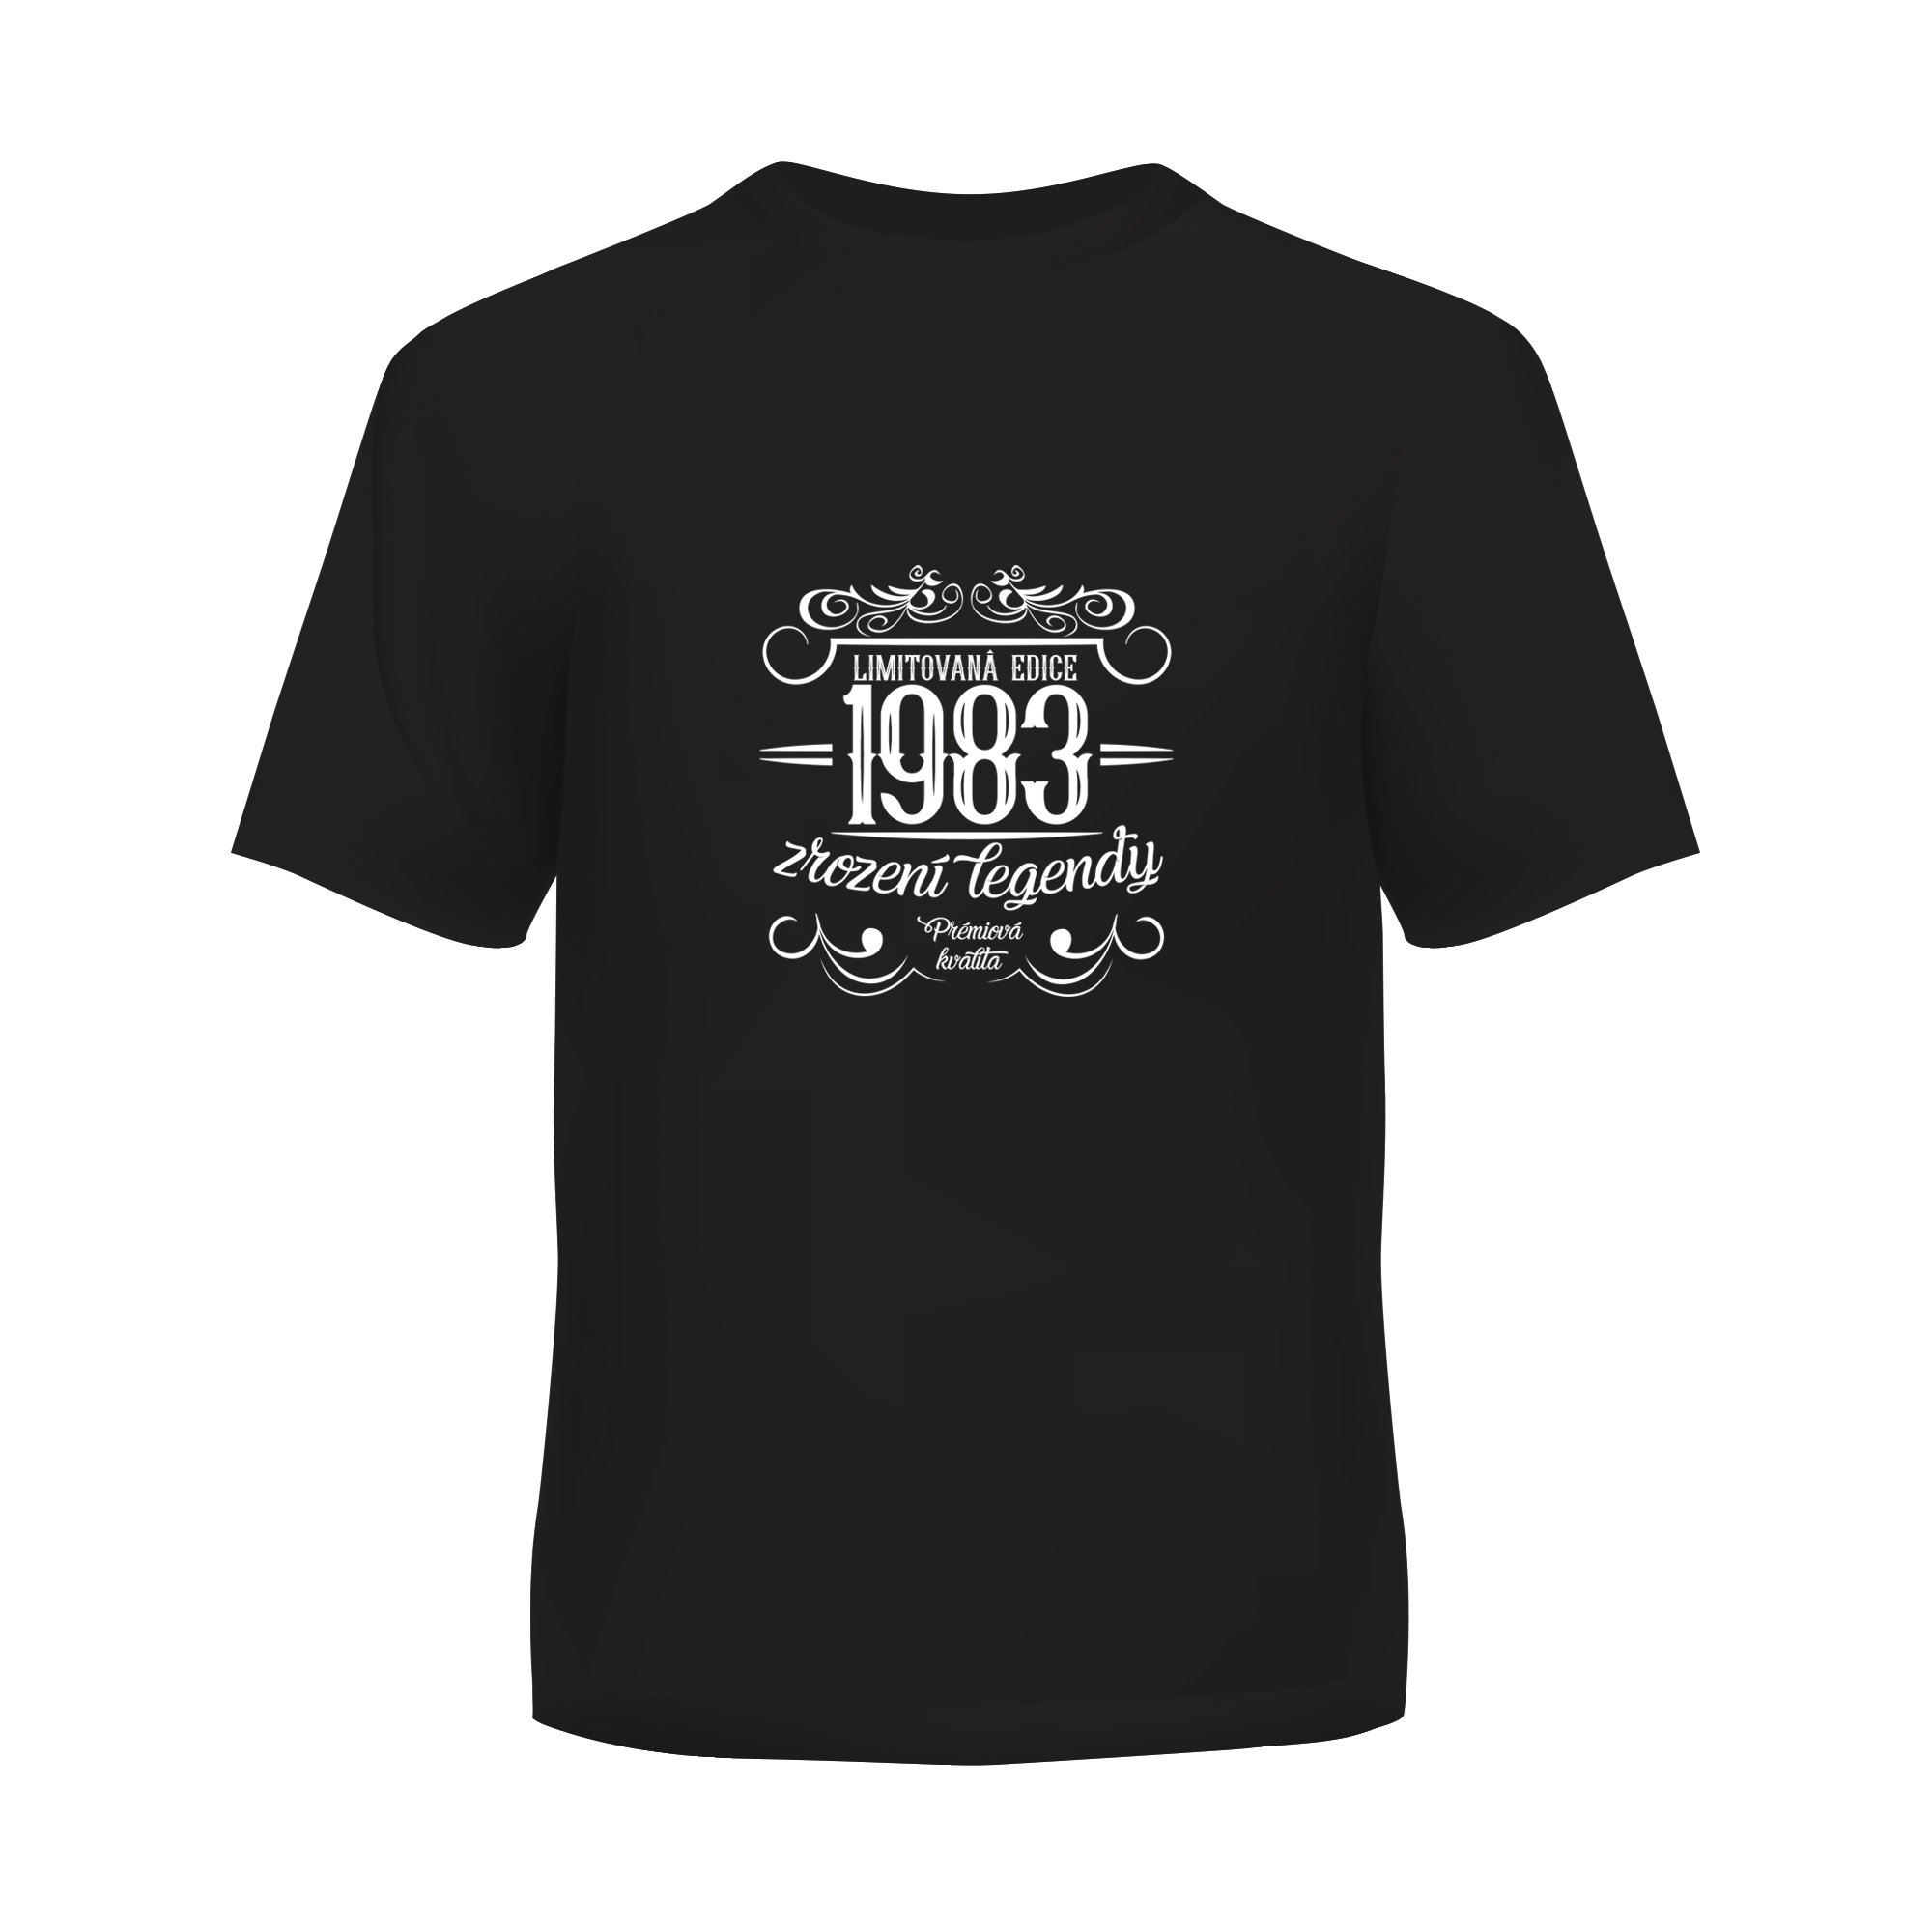 Albi Pánské tričko - Limitovaná edice 1983, vel. L - Albi